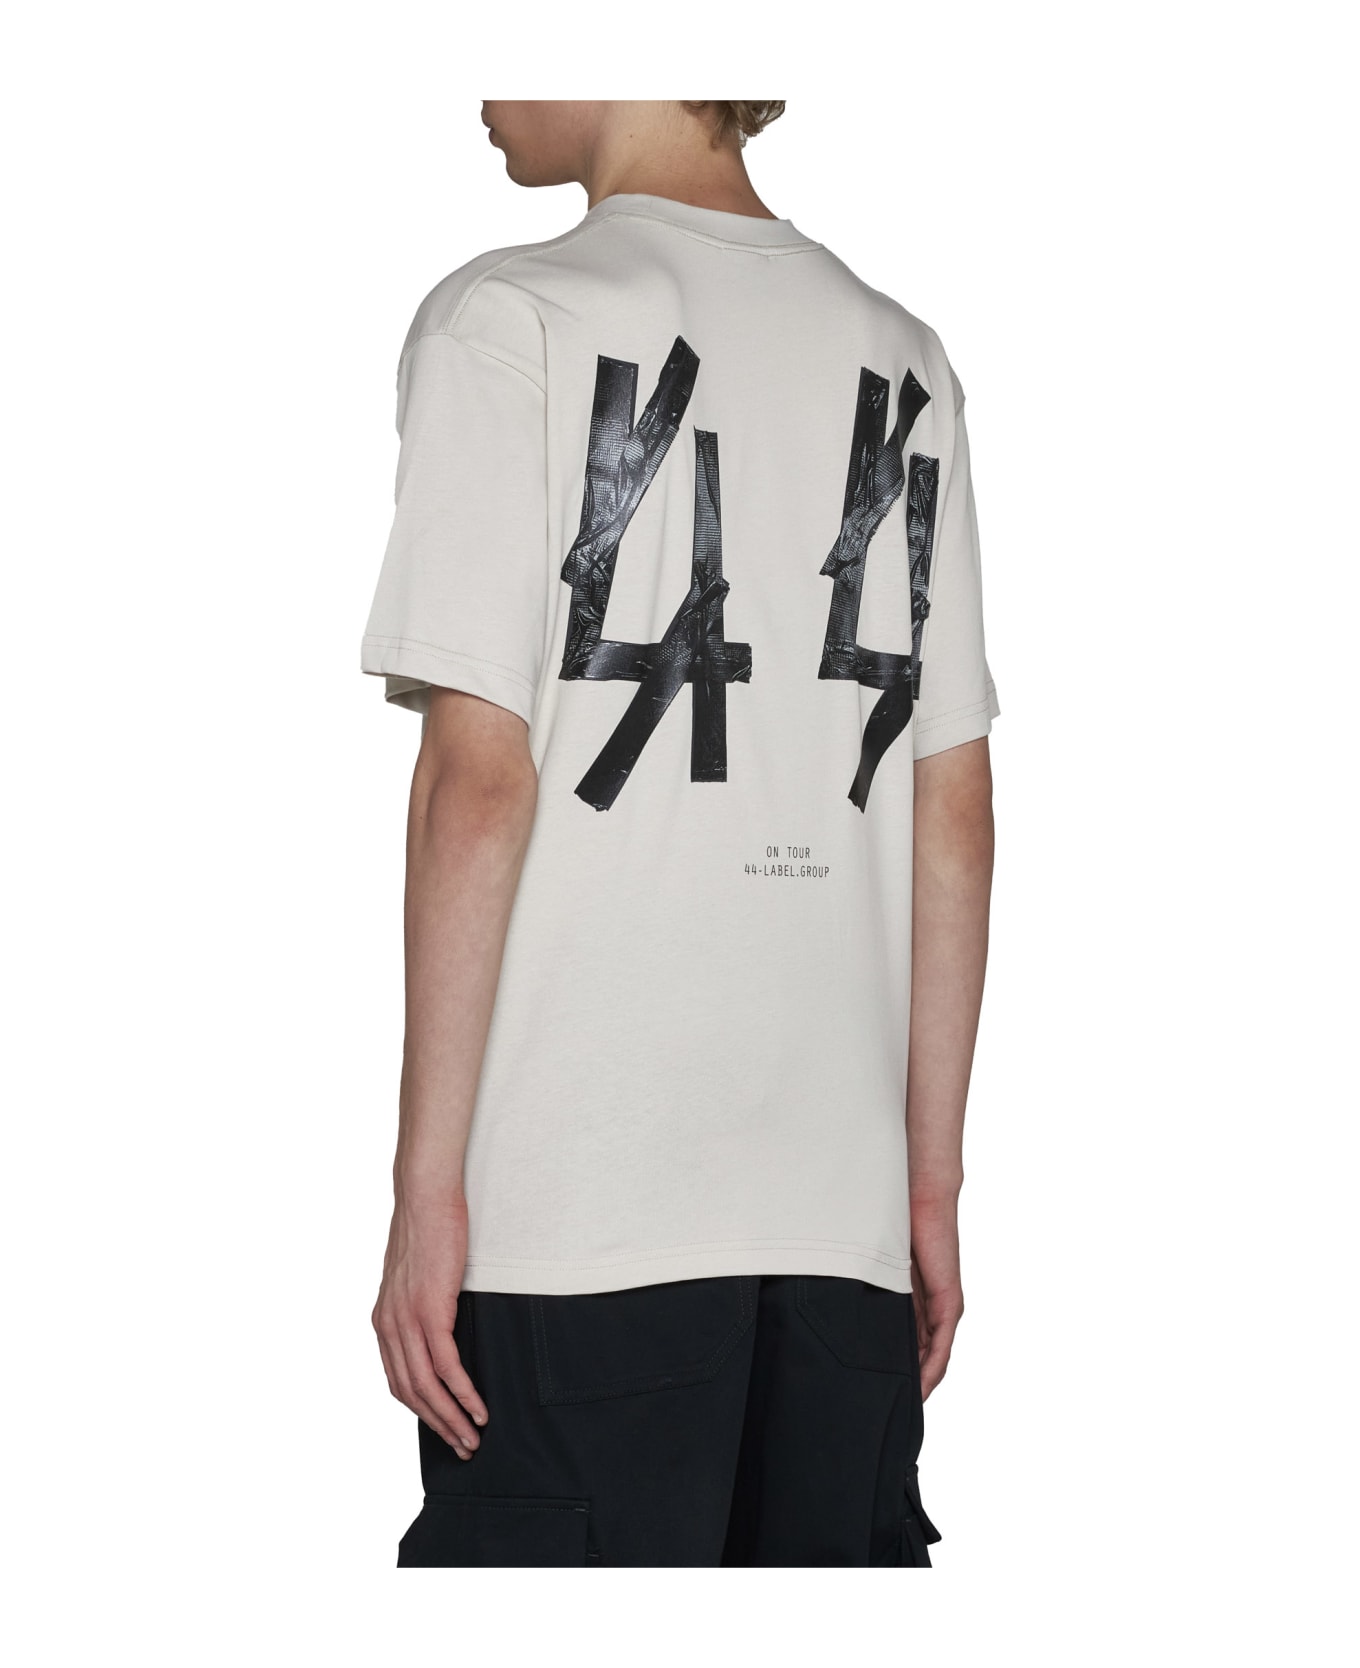 44 Label Group T-Shirt - Dirty white+44 gaffer print